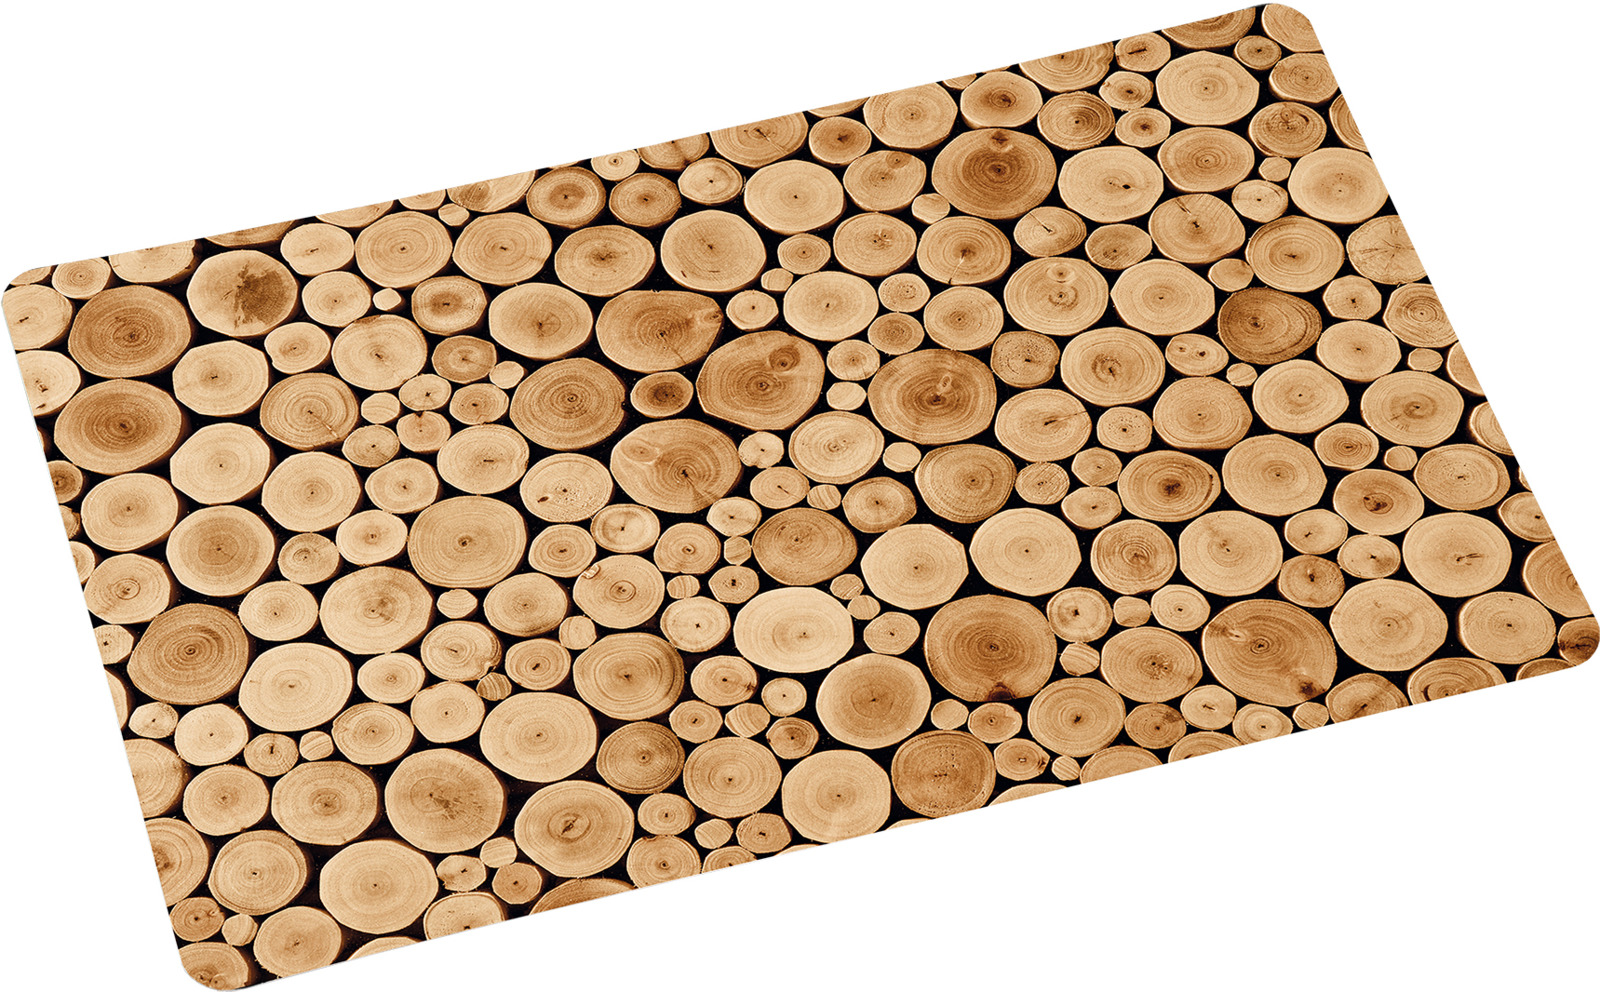 фото Подставка под горячее Kesper, 7758-1, коричневый, 43,5 х 28 см